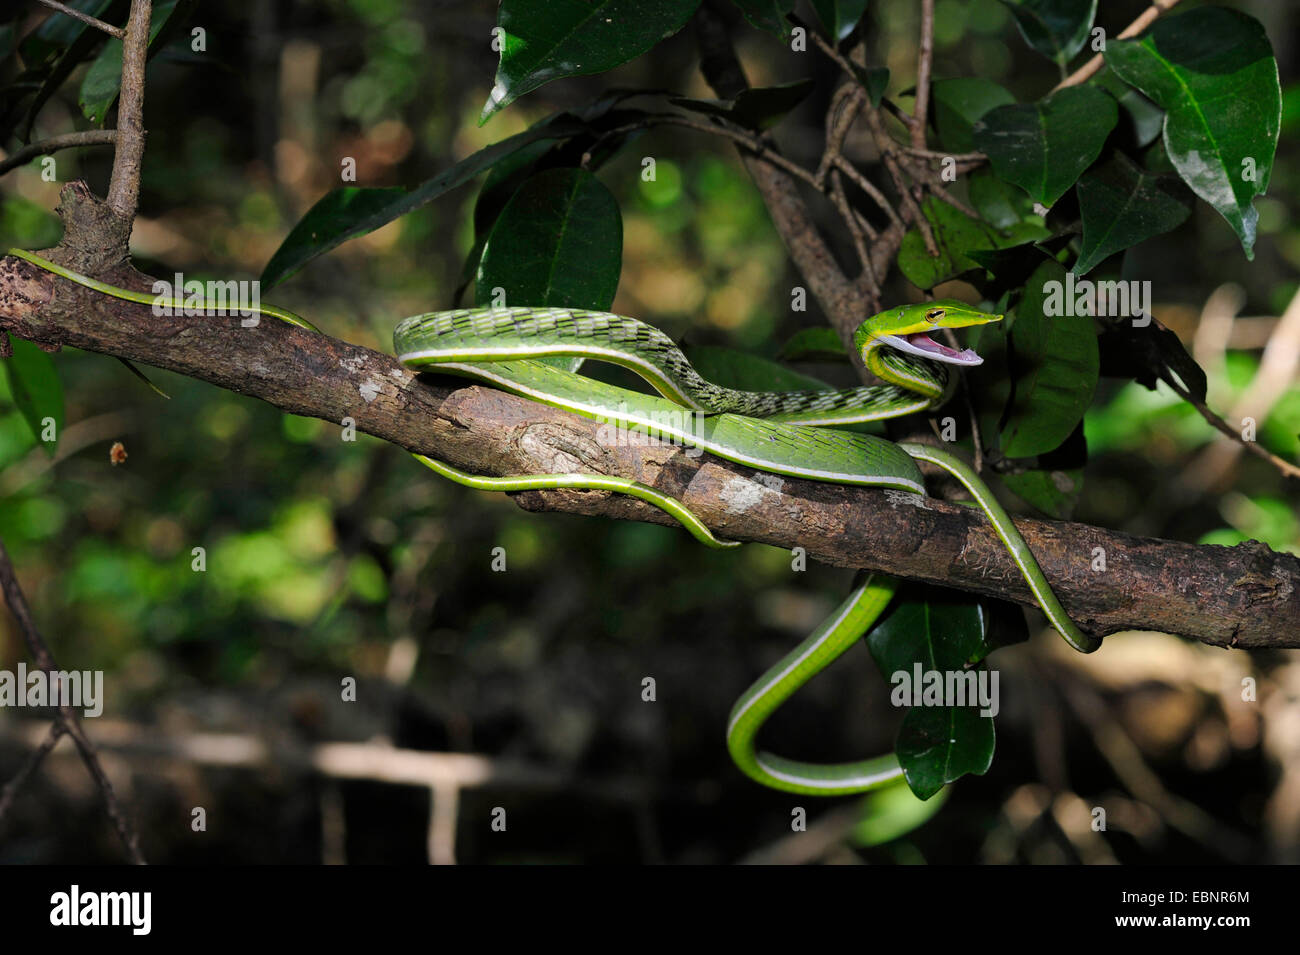 Longnose whipsnake, Green vine snake (Ahaetulla nasuta), defence posture, Sri Lanka Stock Photo